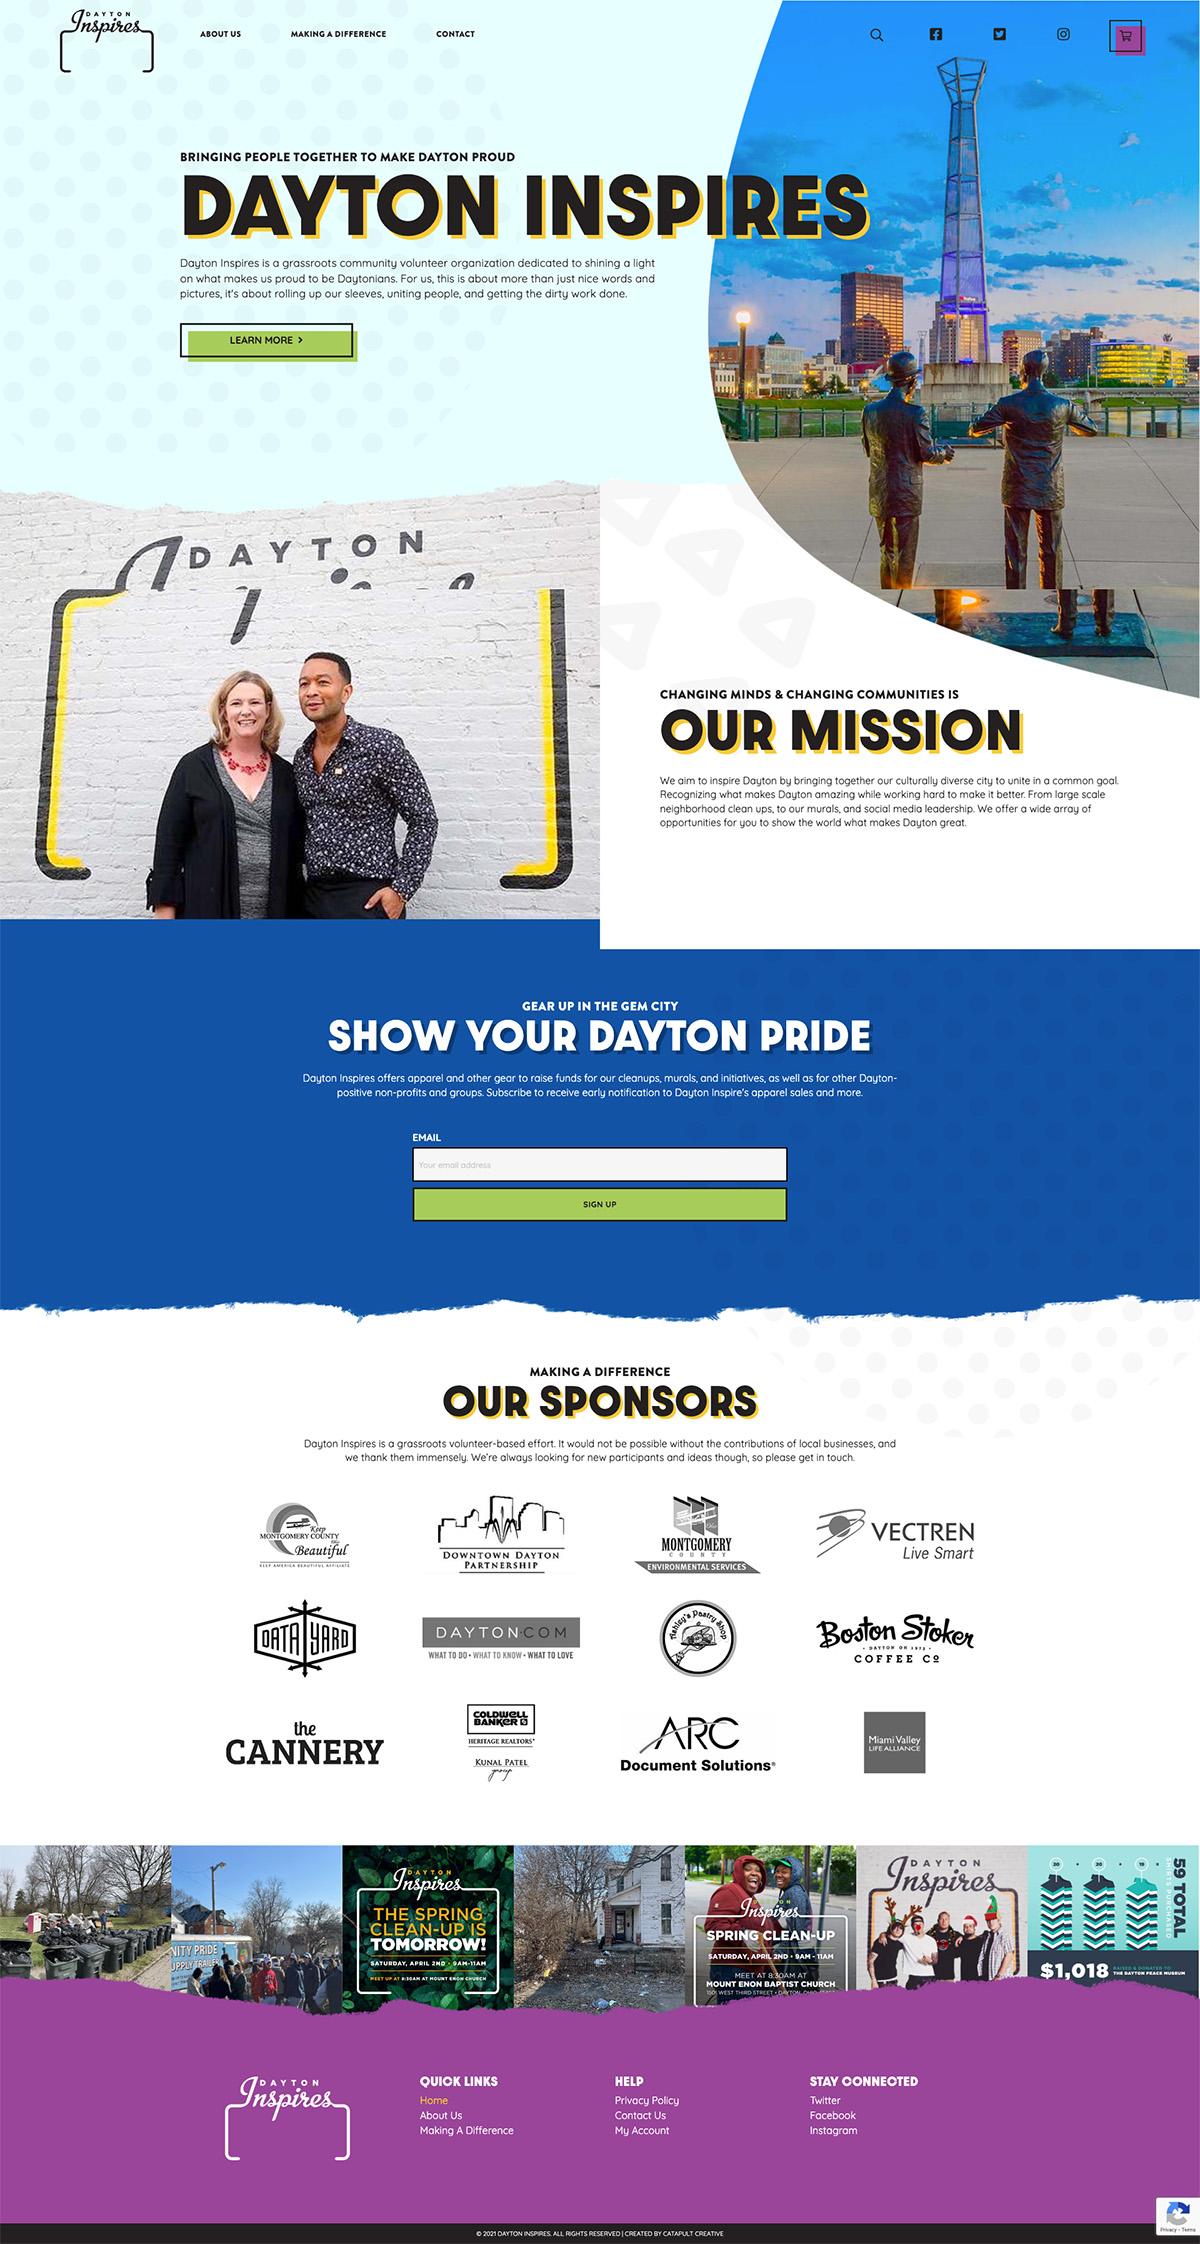 Dayton Inspires website